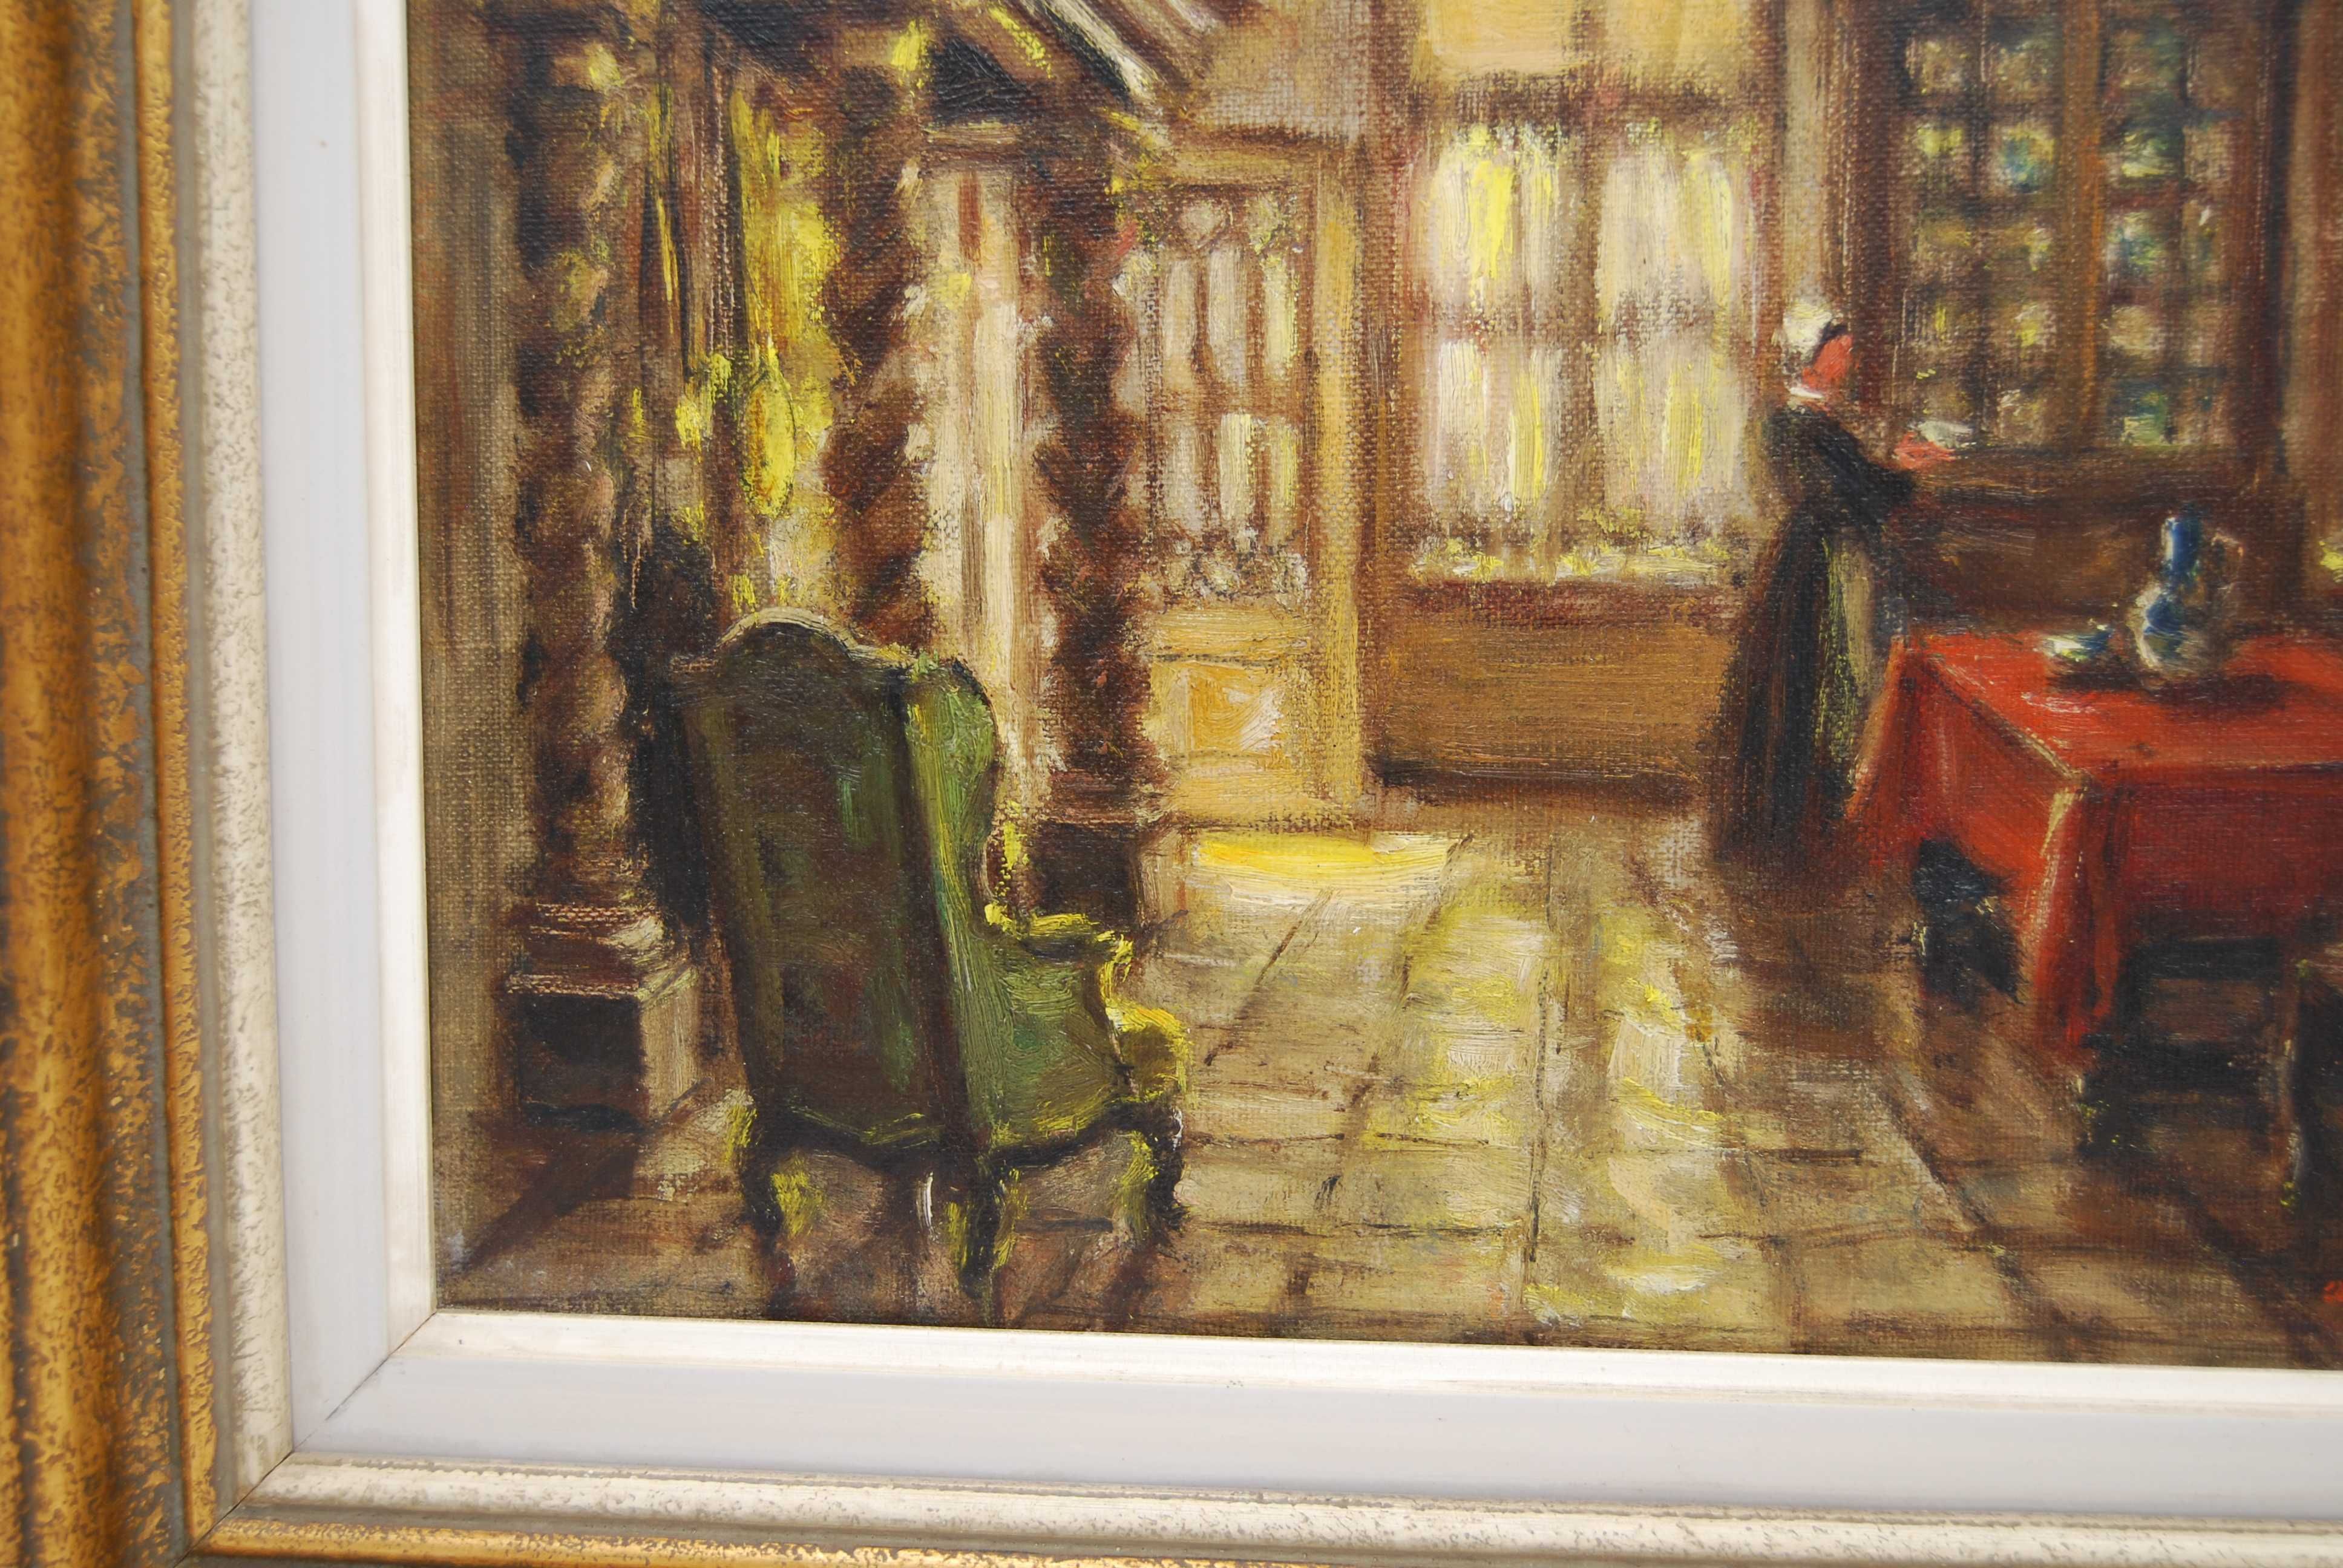 Albert Geudens (1869 - 1949) obraz "Kobieta w jadalni"